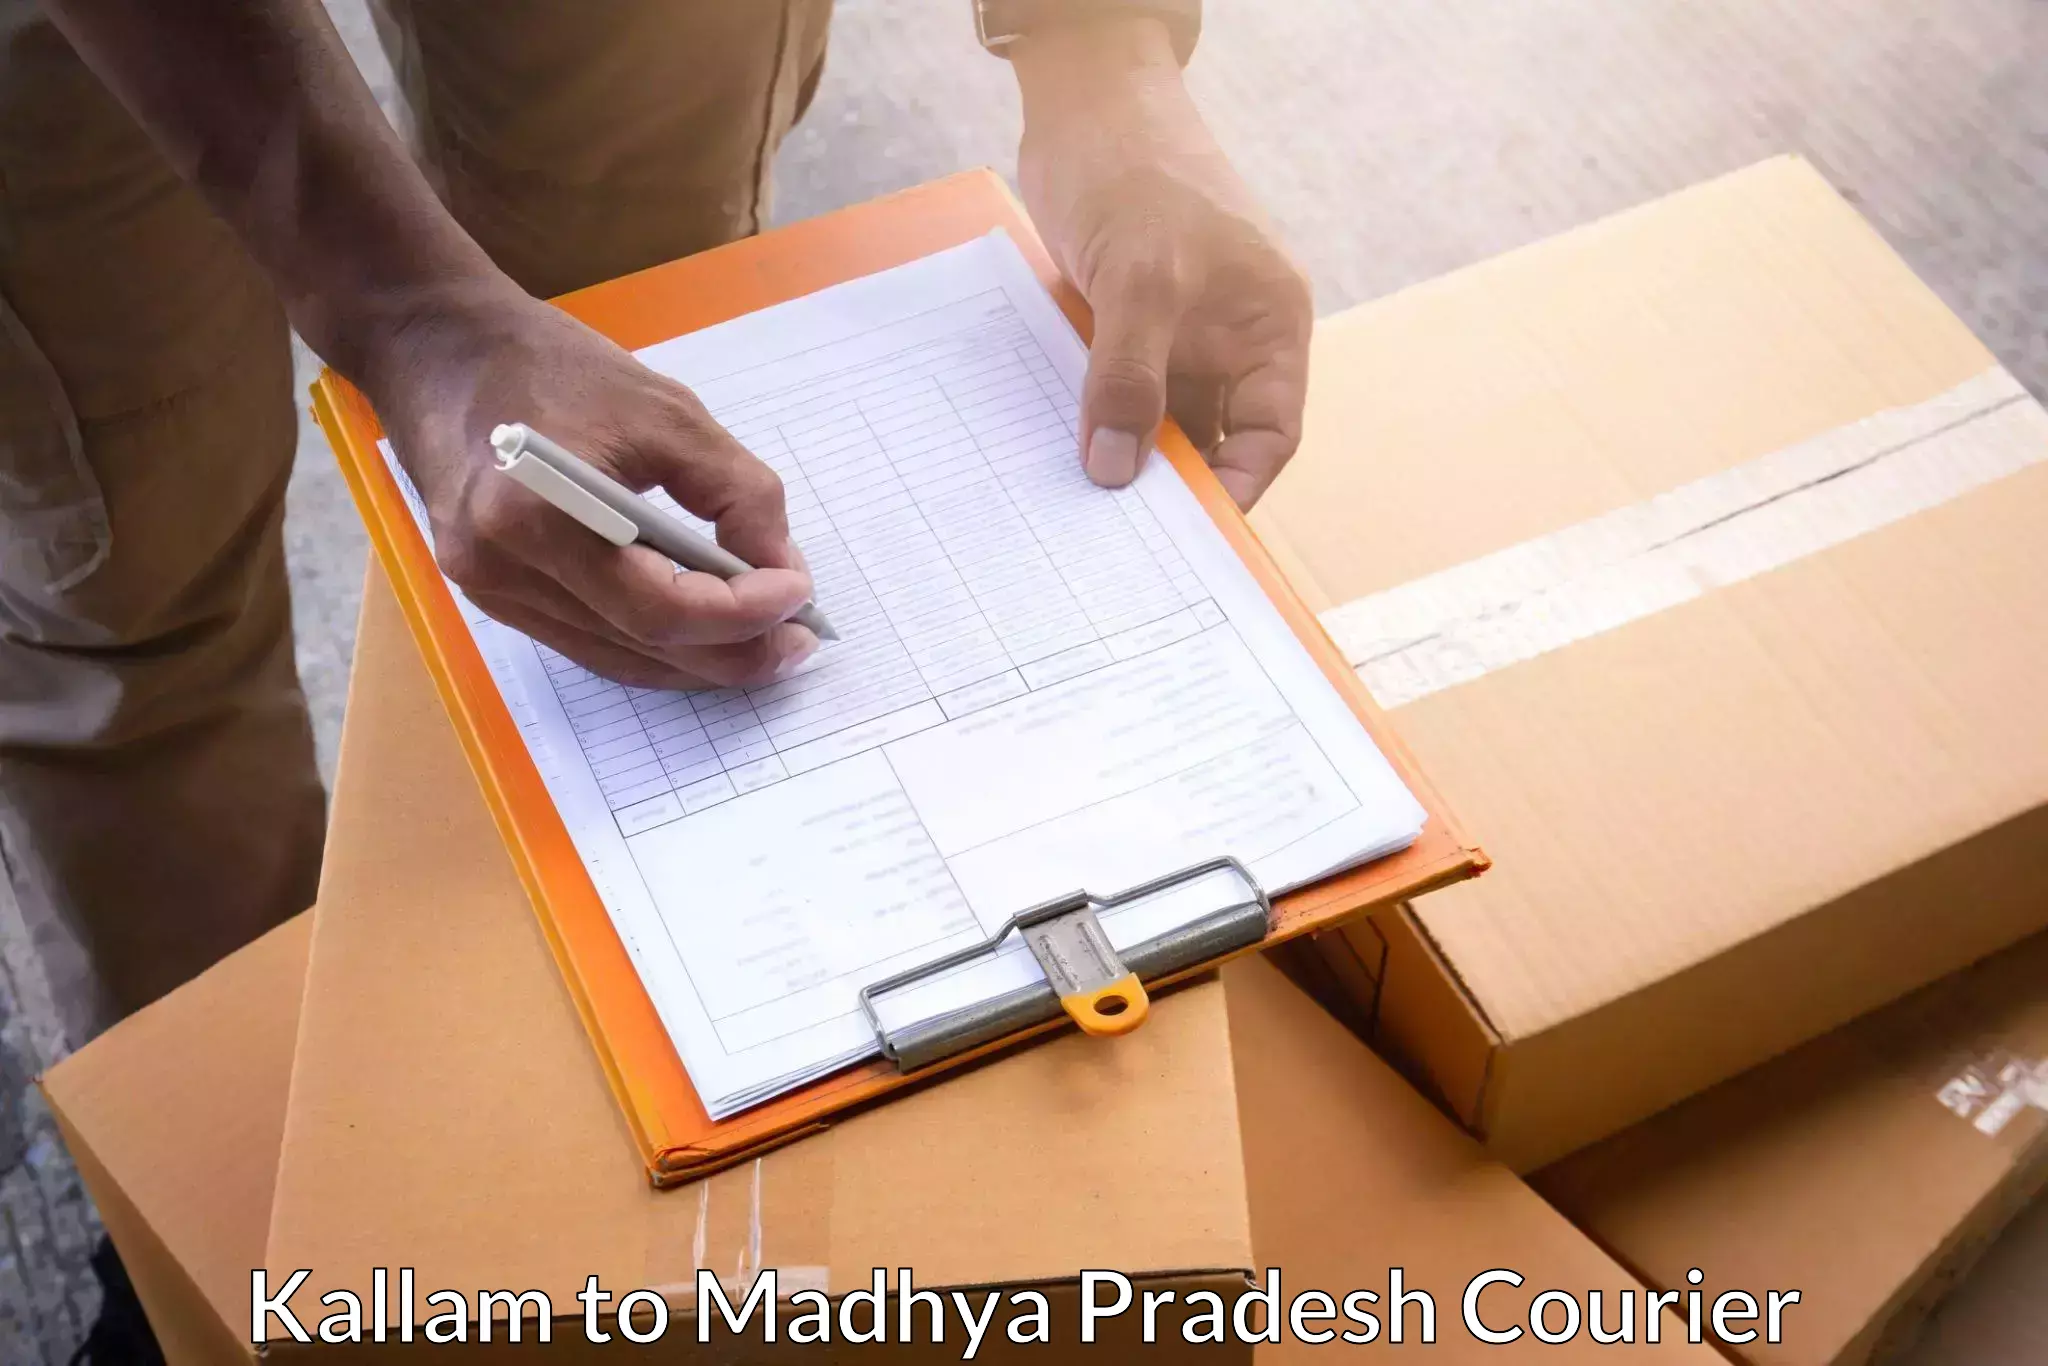 Logistics service provider Kallam to Nainpur